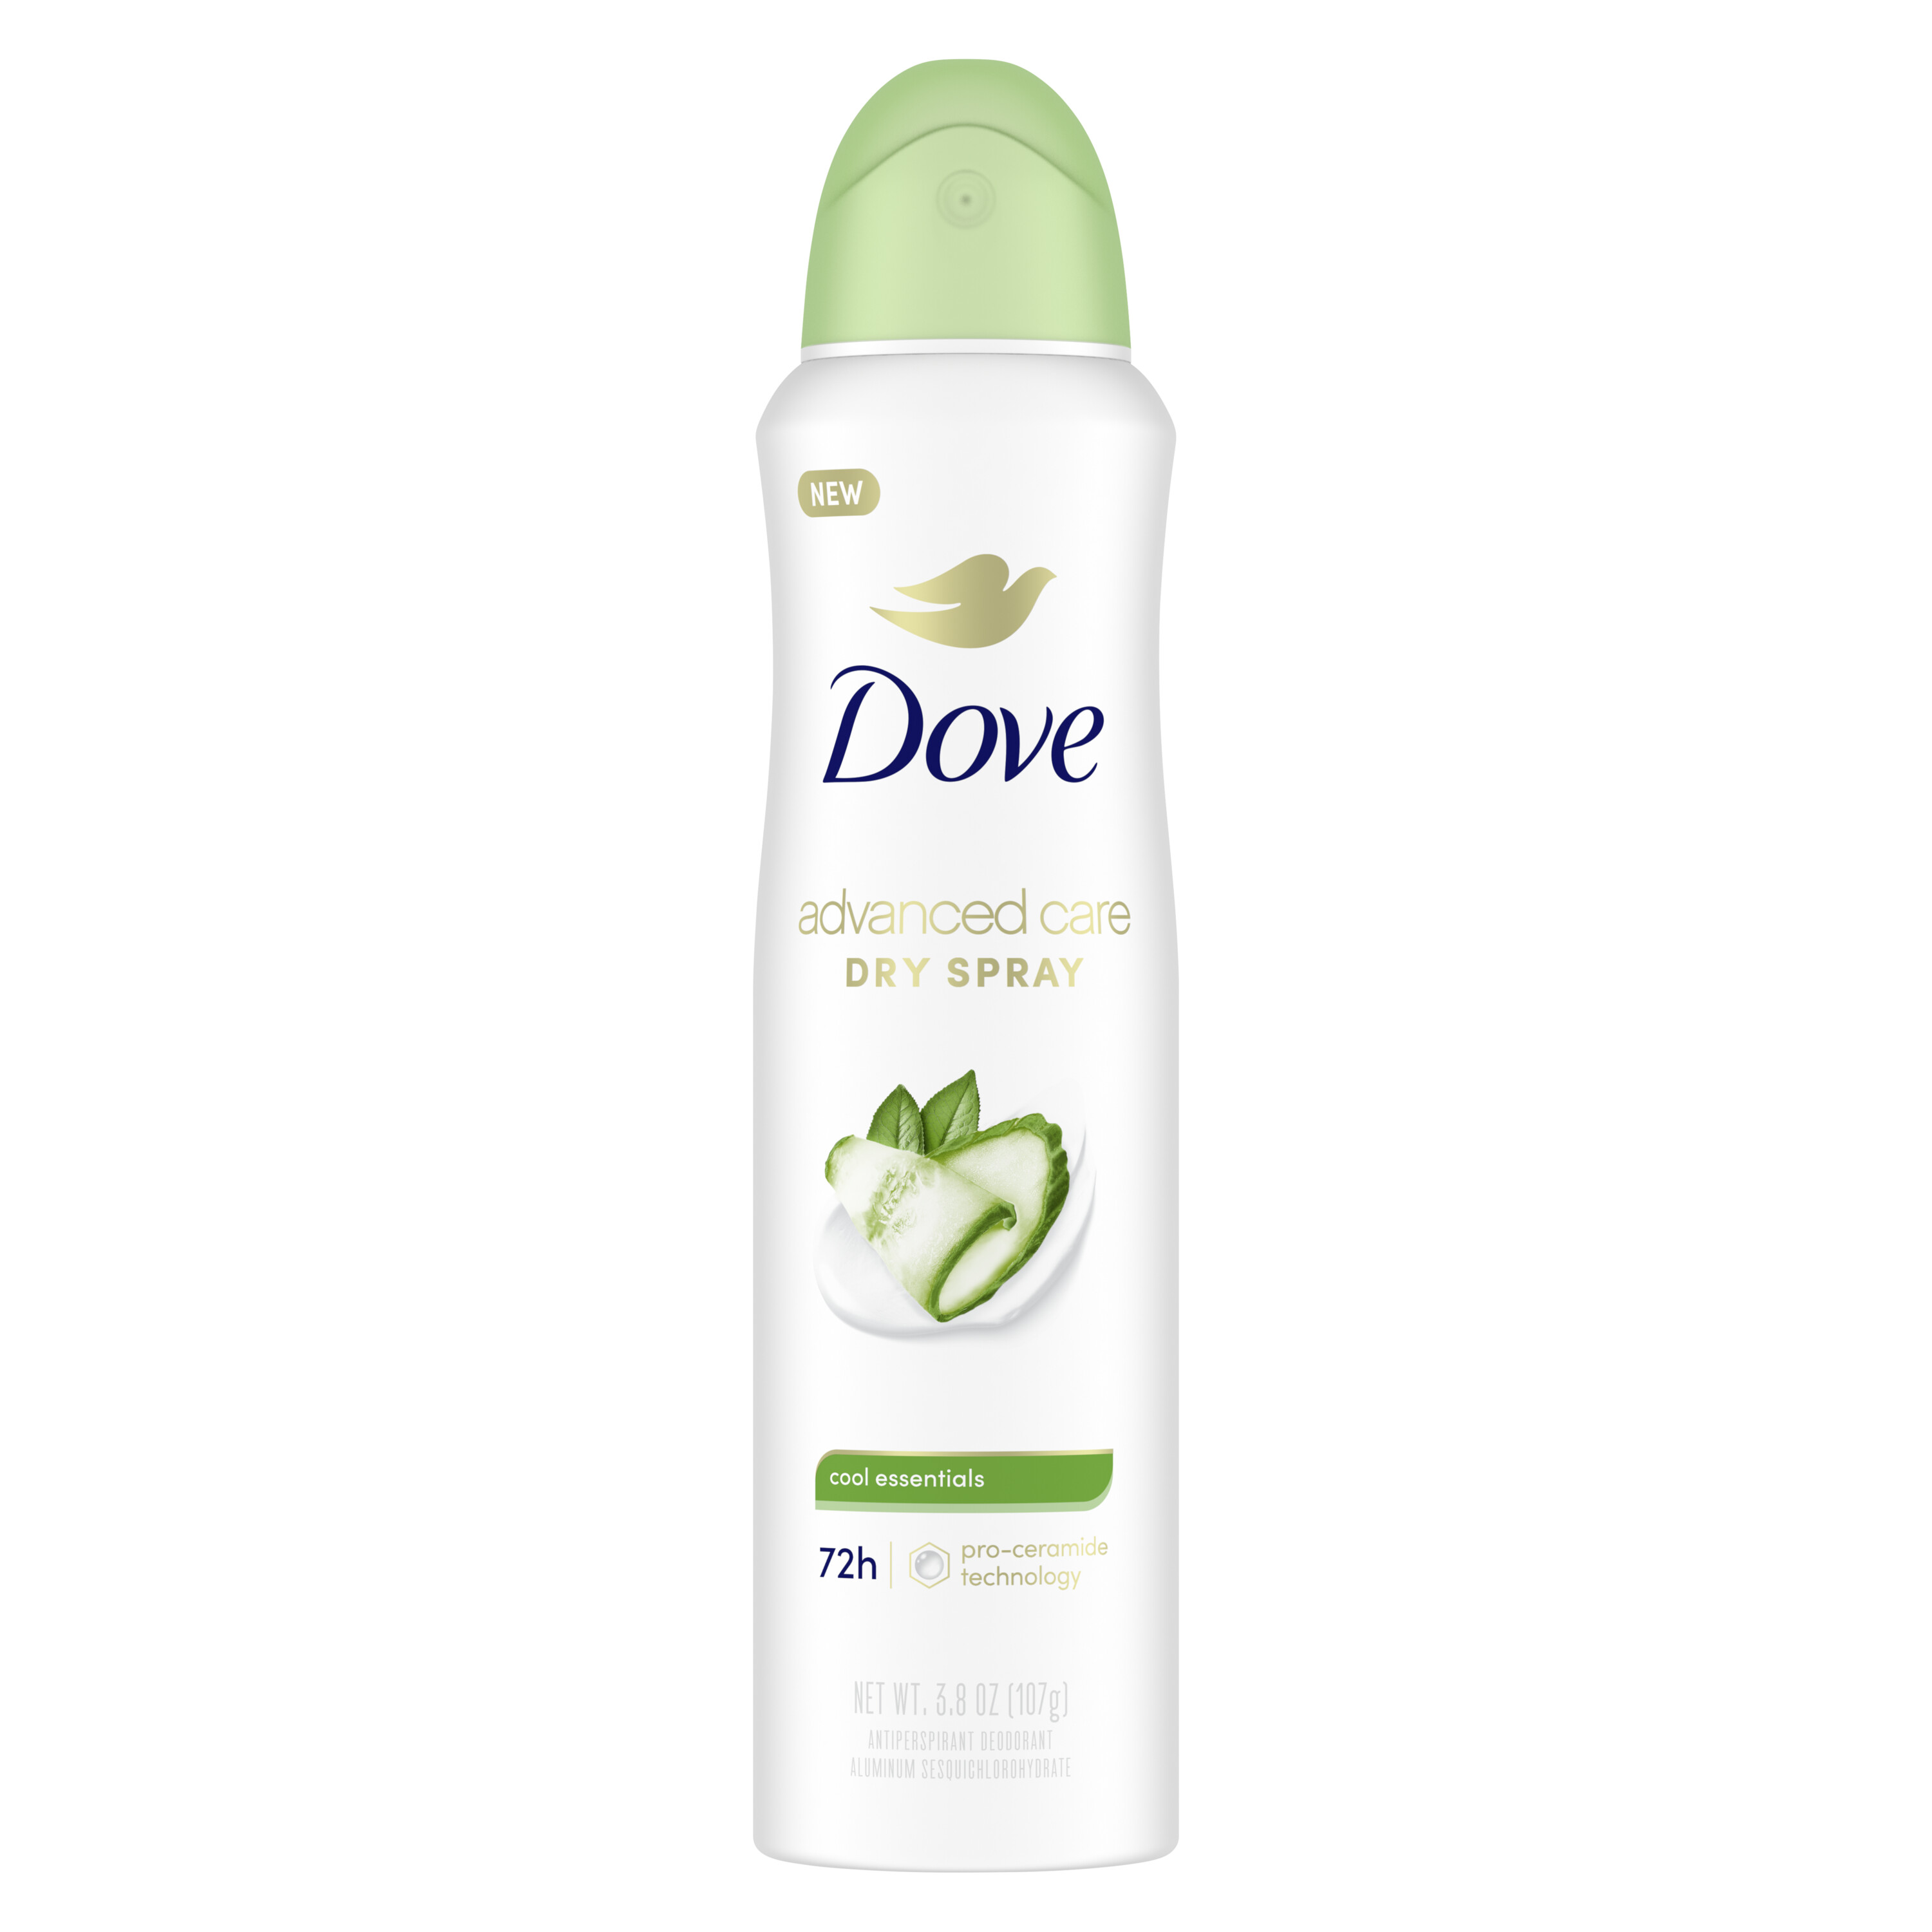 Dove Advanced Care Long Lasting Women's Antiperspirant Deodorant Dry Spray, Cool Essentials, 3.8 oz - image 1 of 11